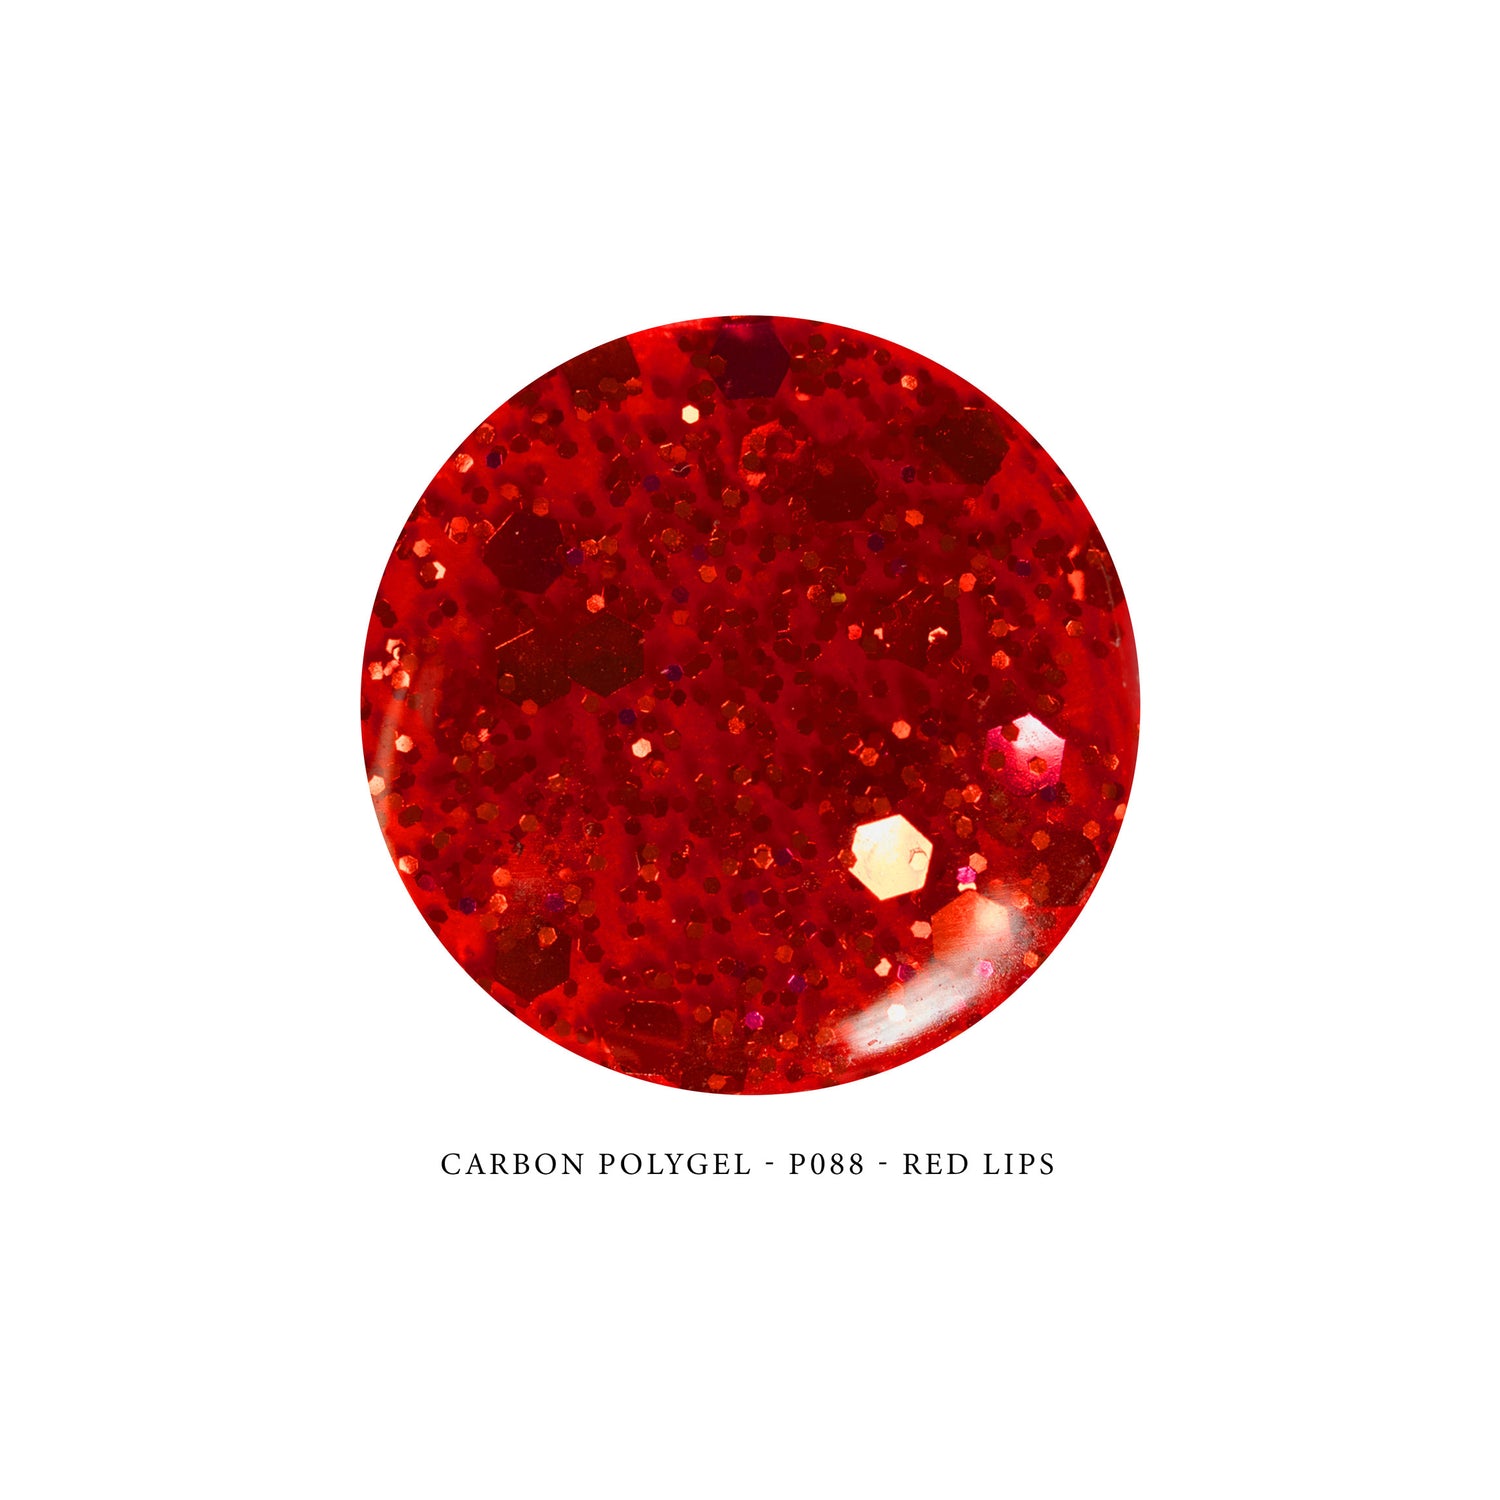 Carbon Polygel P088 - RED LIPS 30g